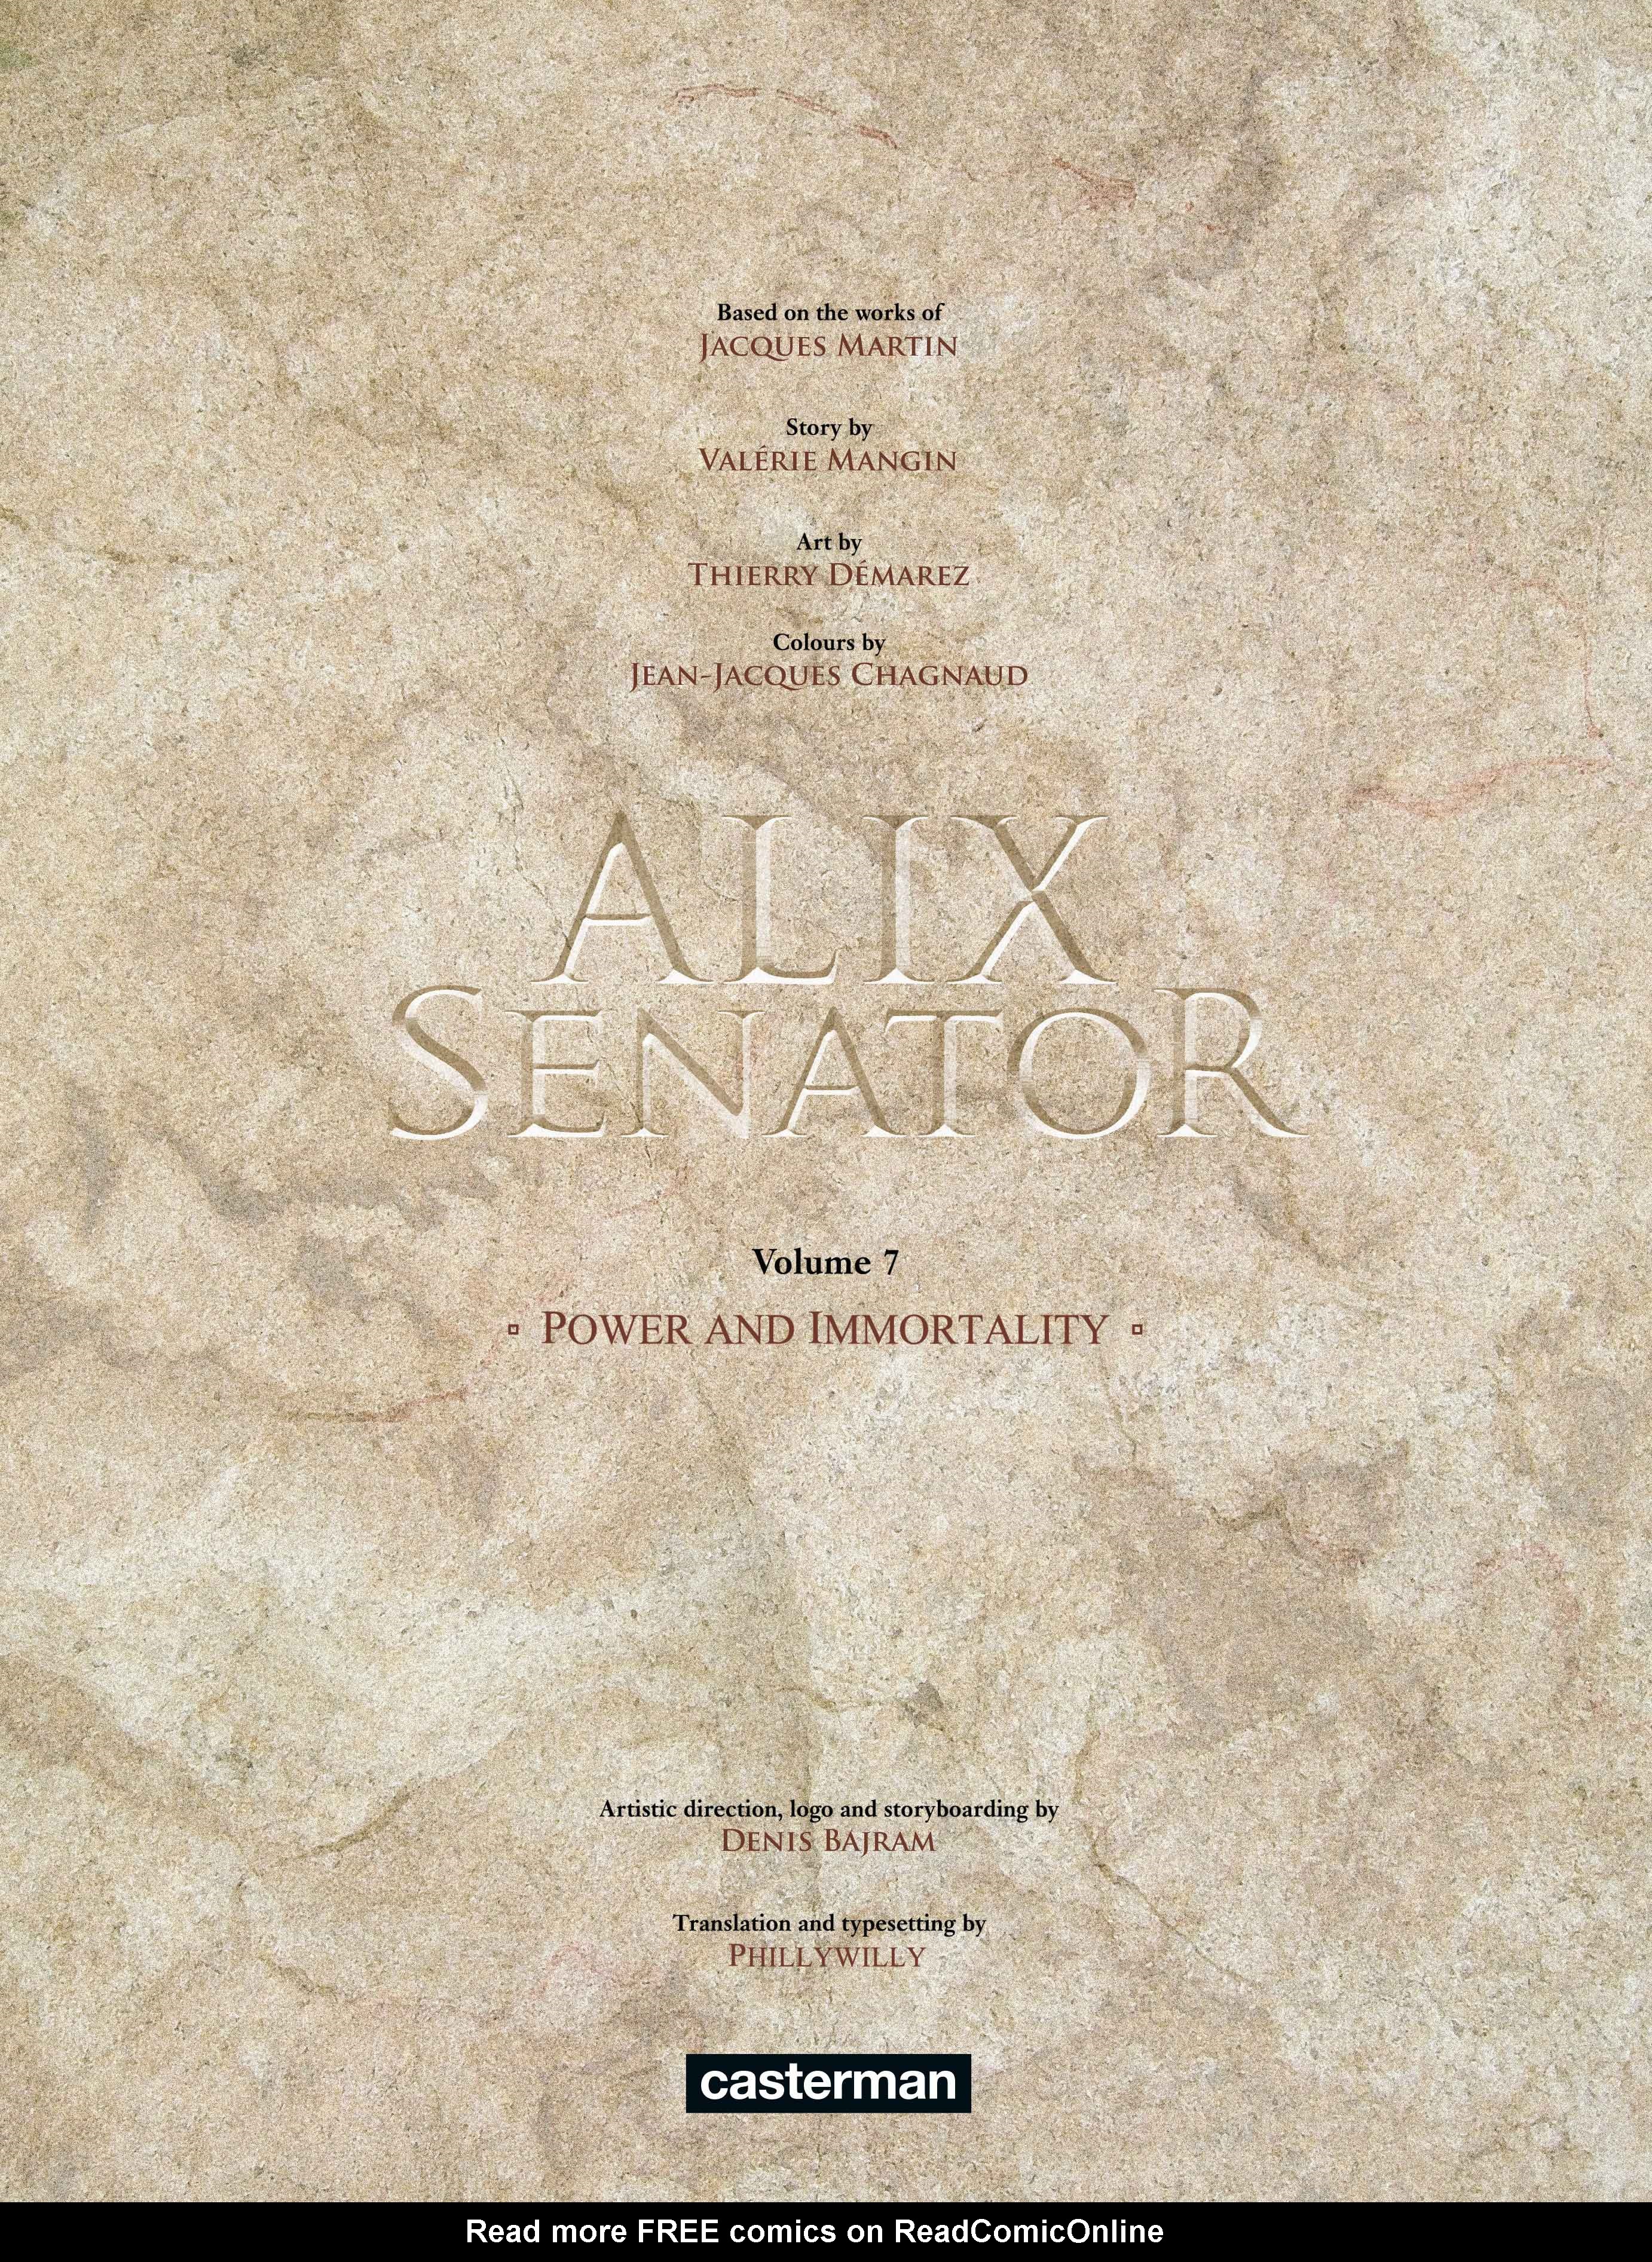 Read online Alix Senator comic -  Issue #7 - 2